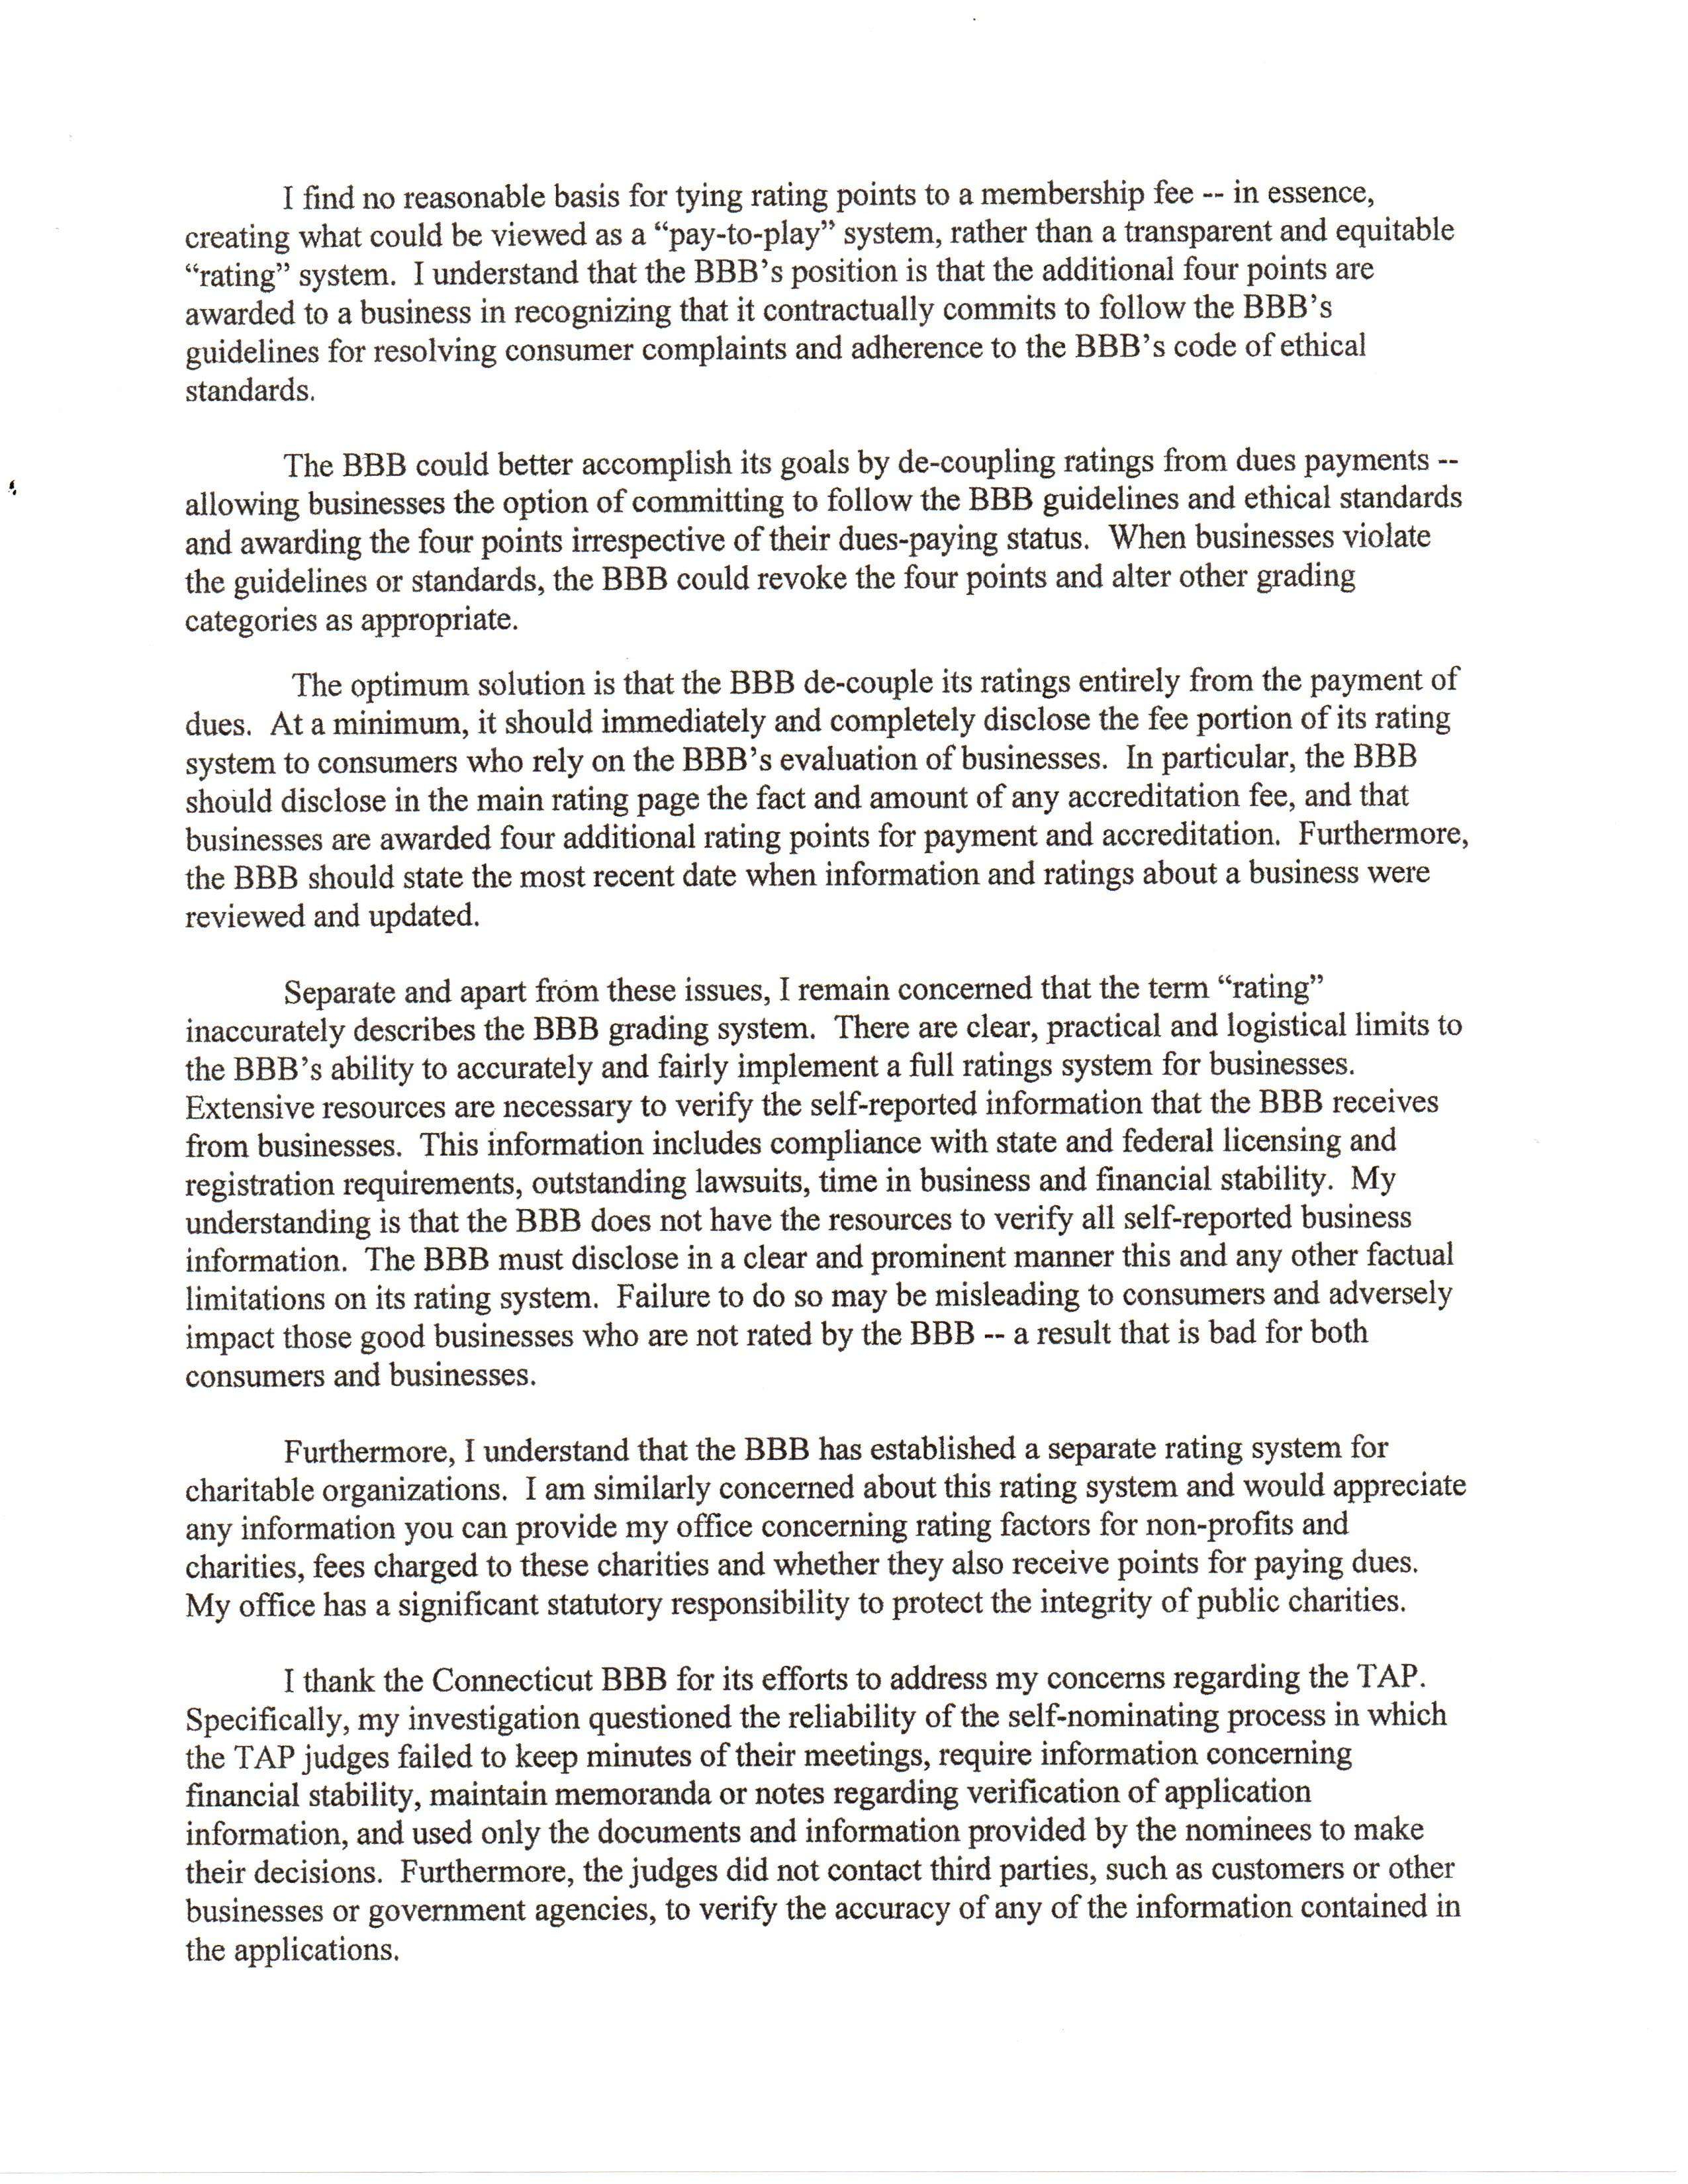 Former Atty Gen Richard Blumenthal's letter, Pg 2